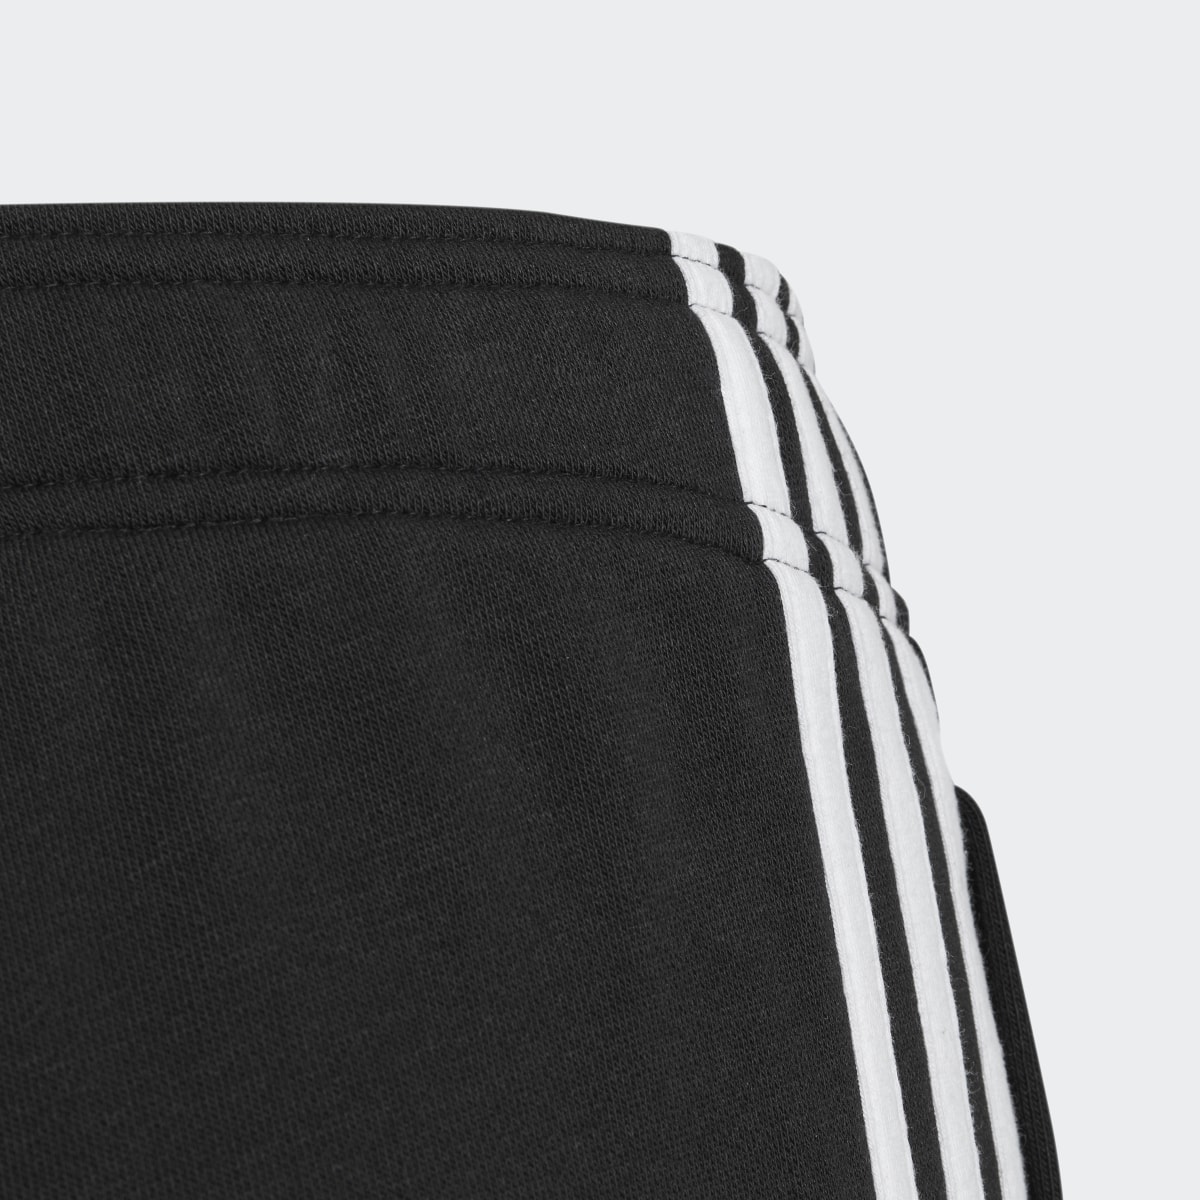 Adidas Germany Pants. 5